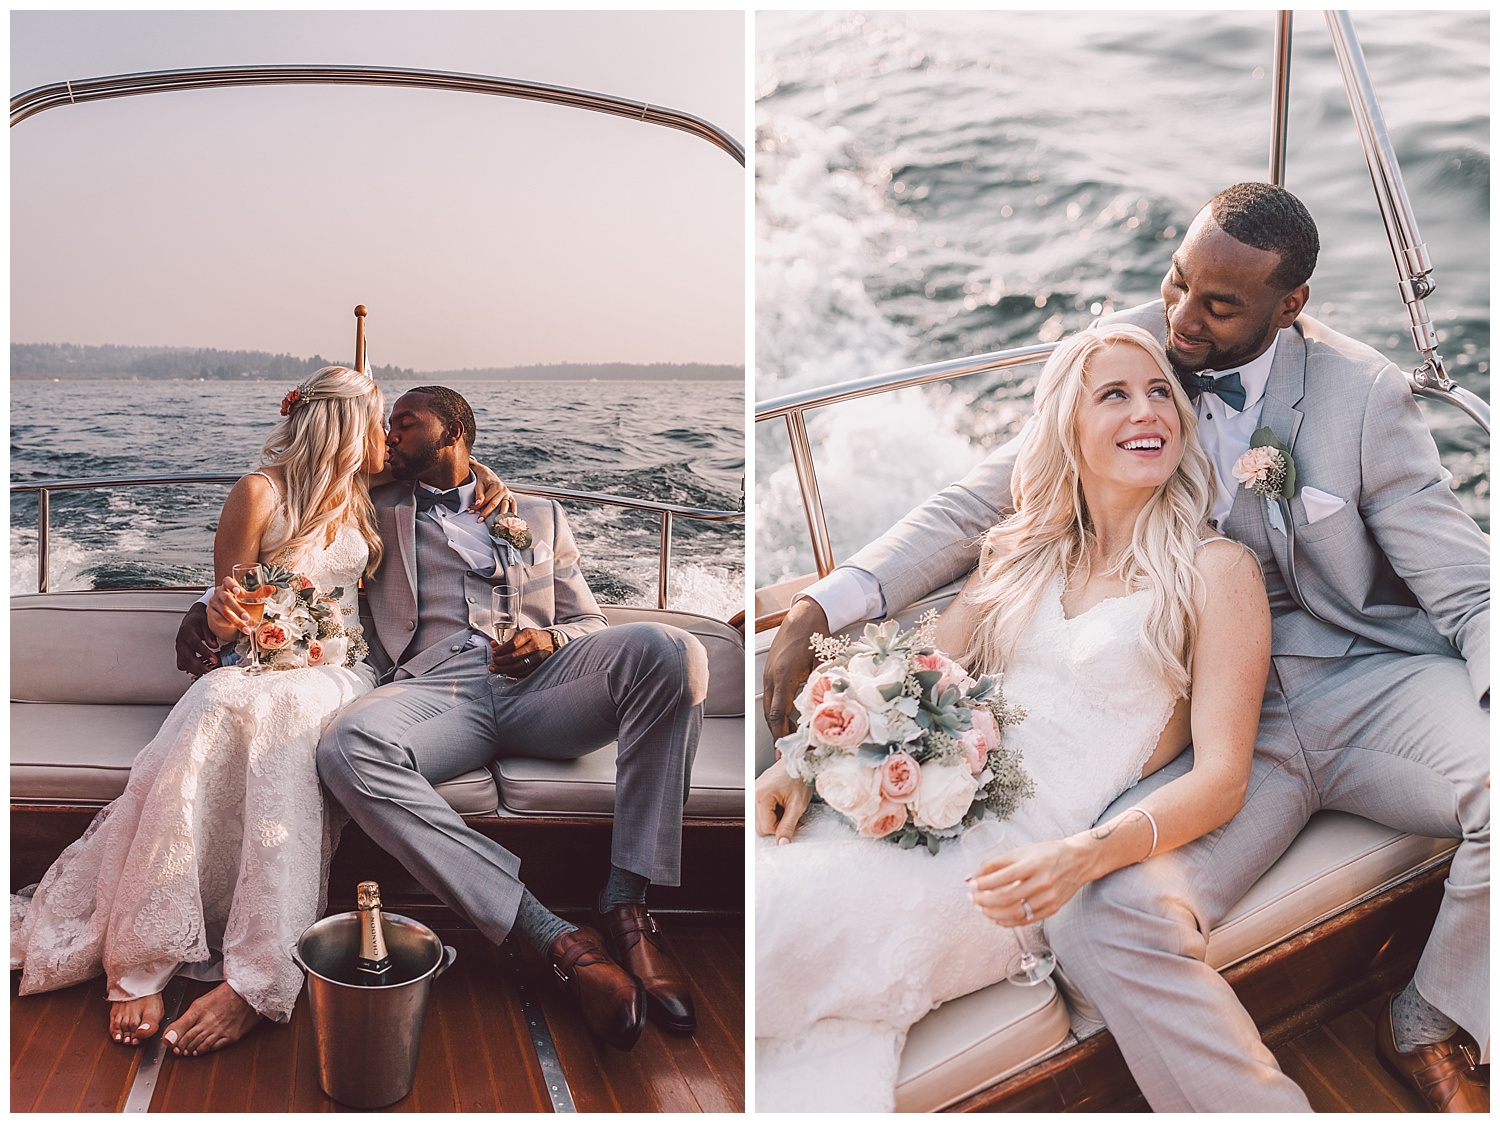 Woodmark Hotel boat wedding photos